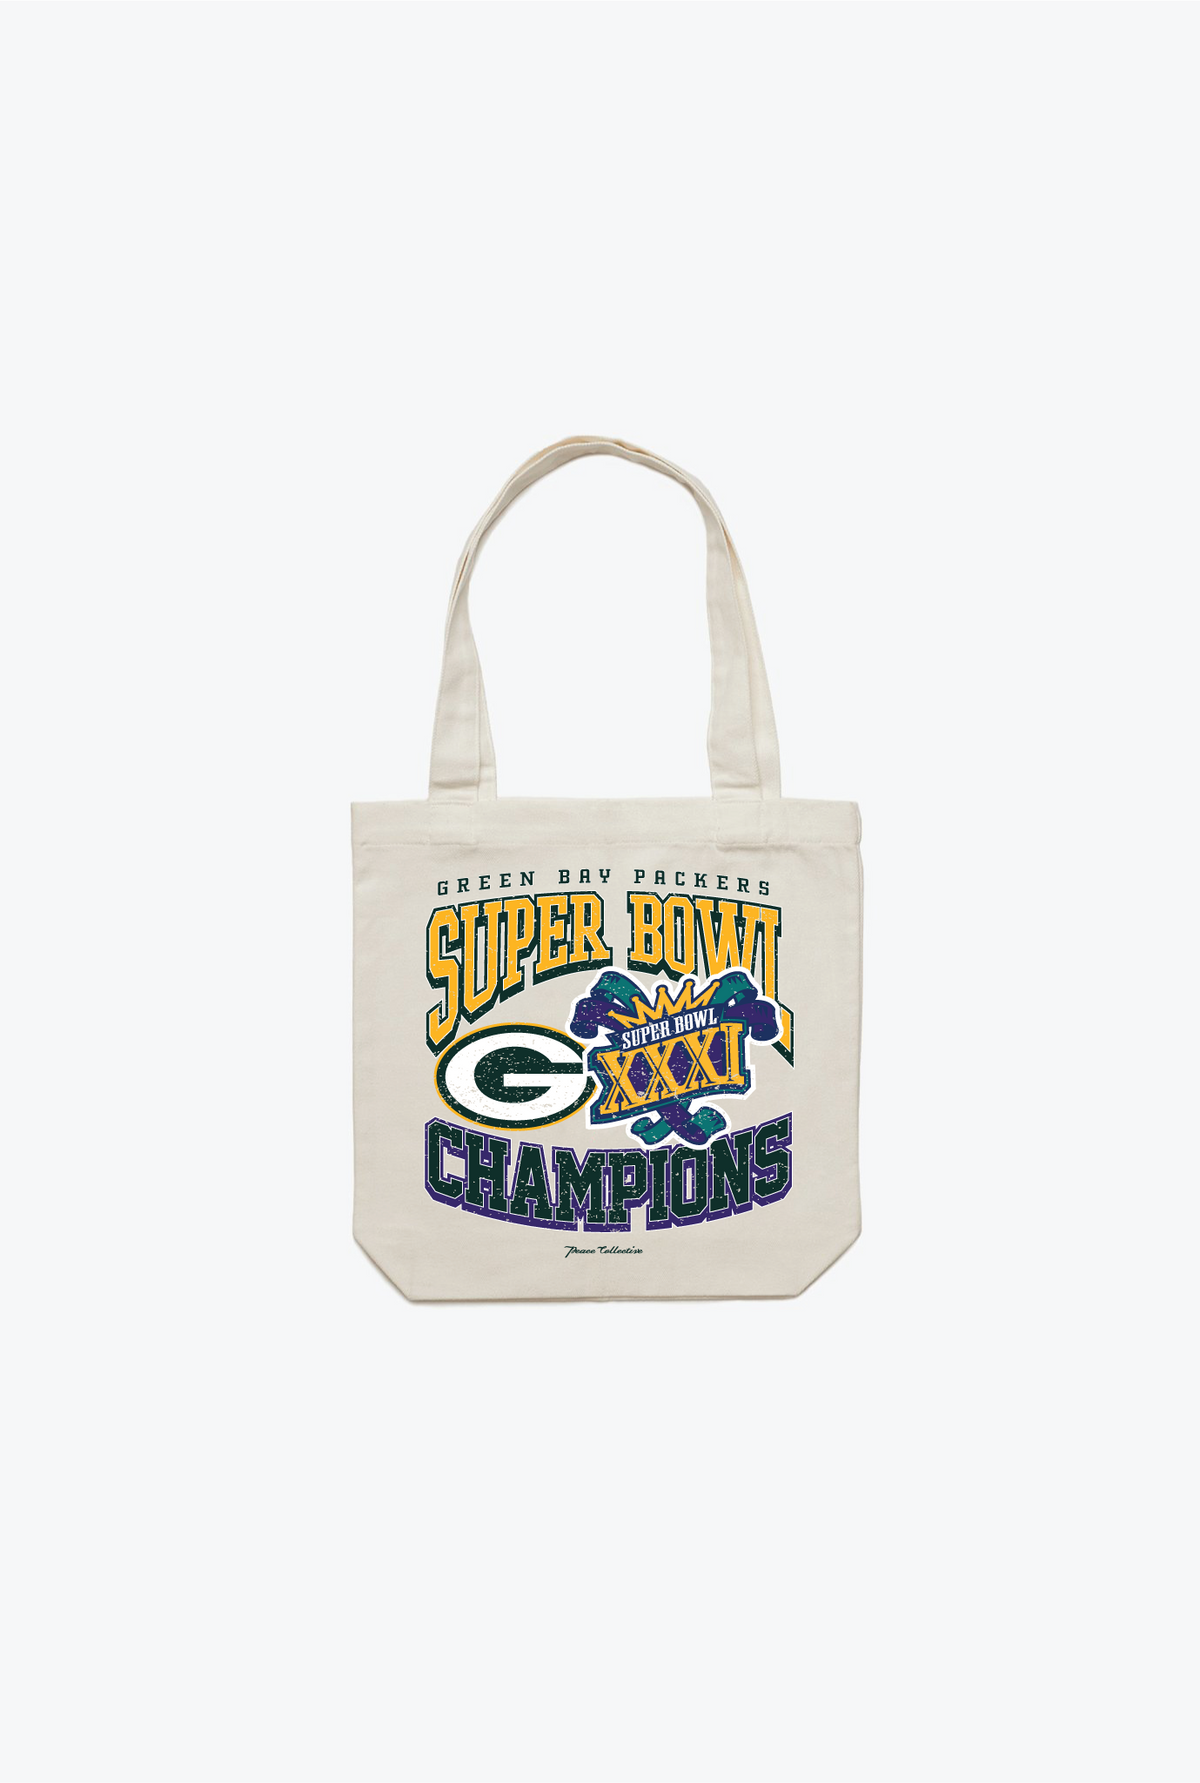 Green Bay Packers Super Bowl XXXI Tote Bag - Ivory